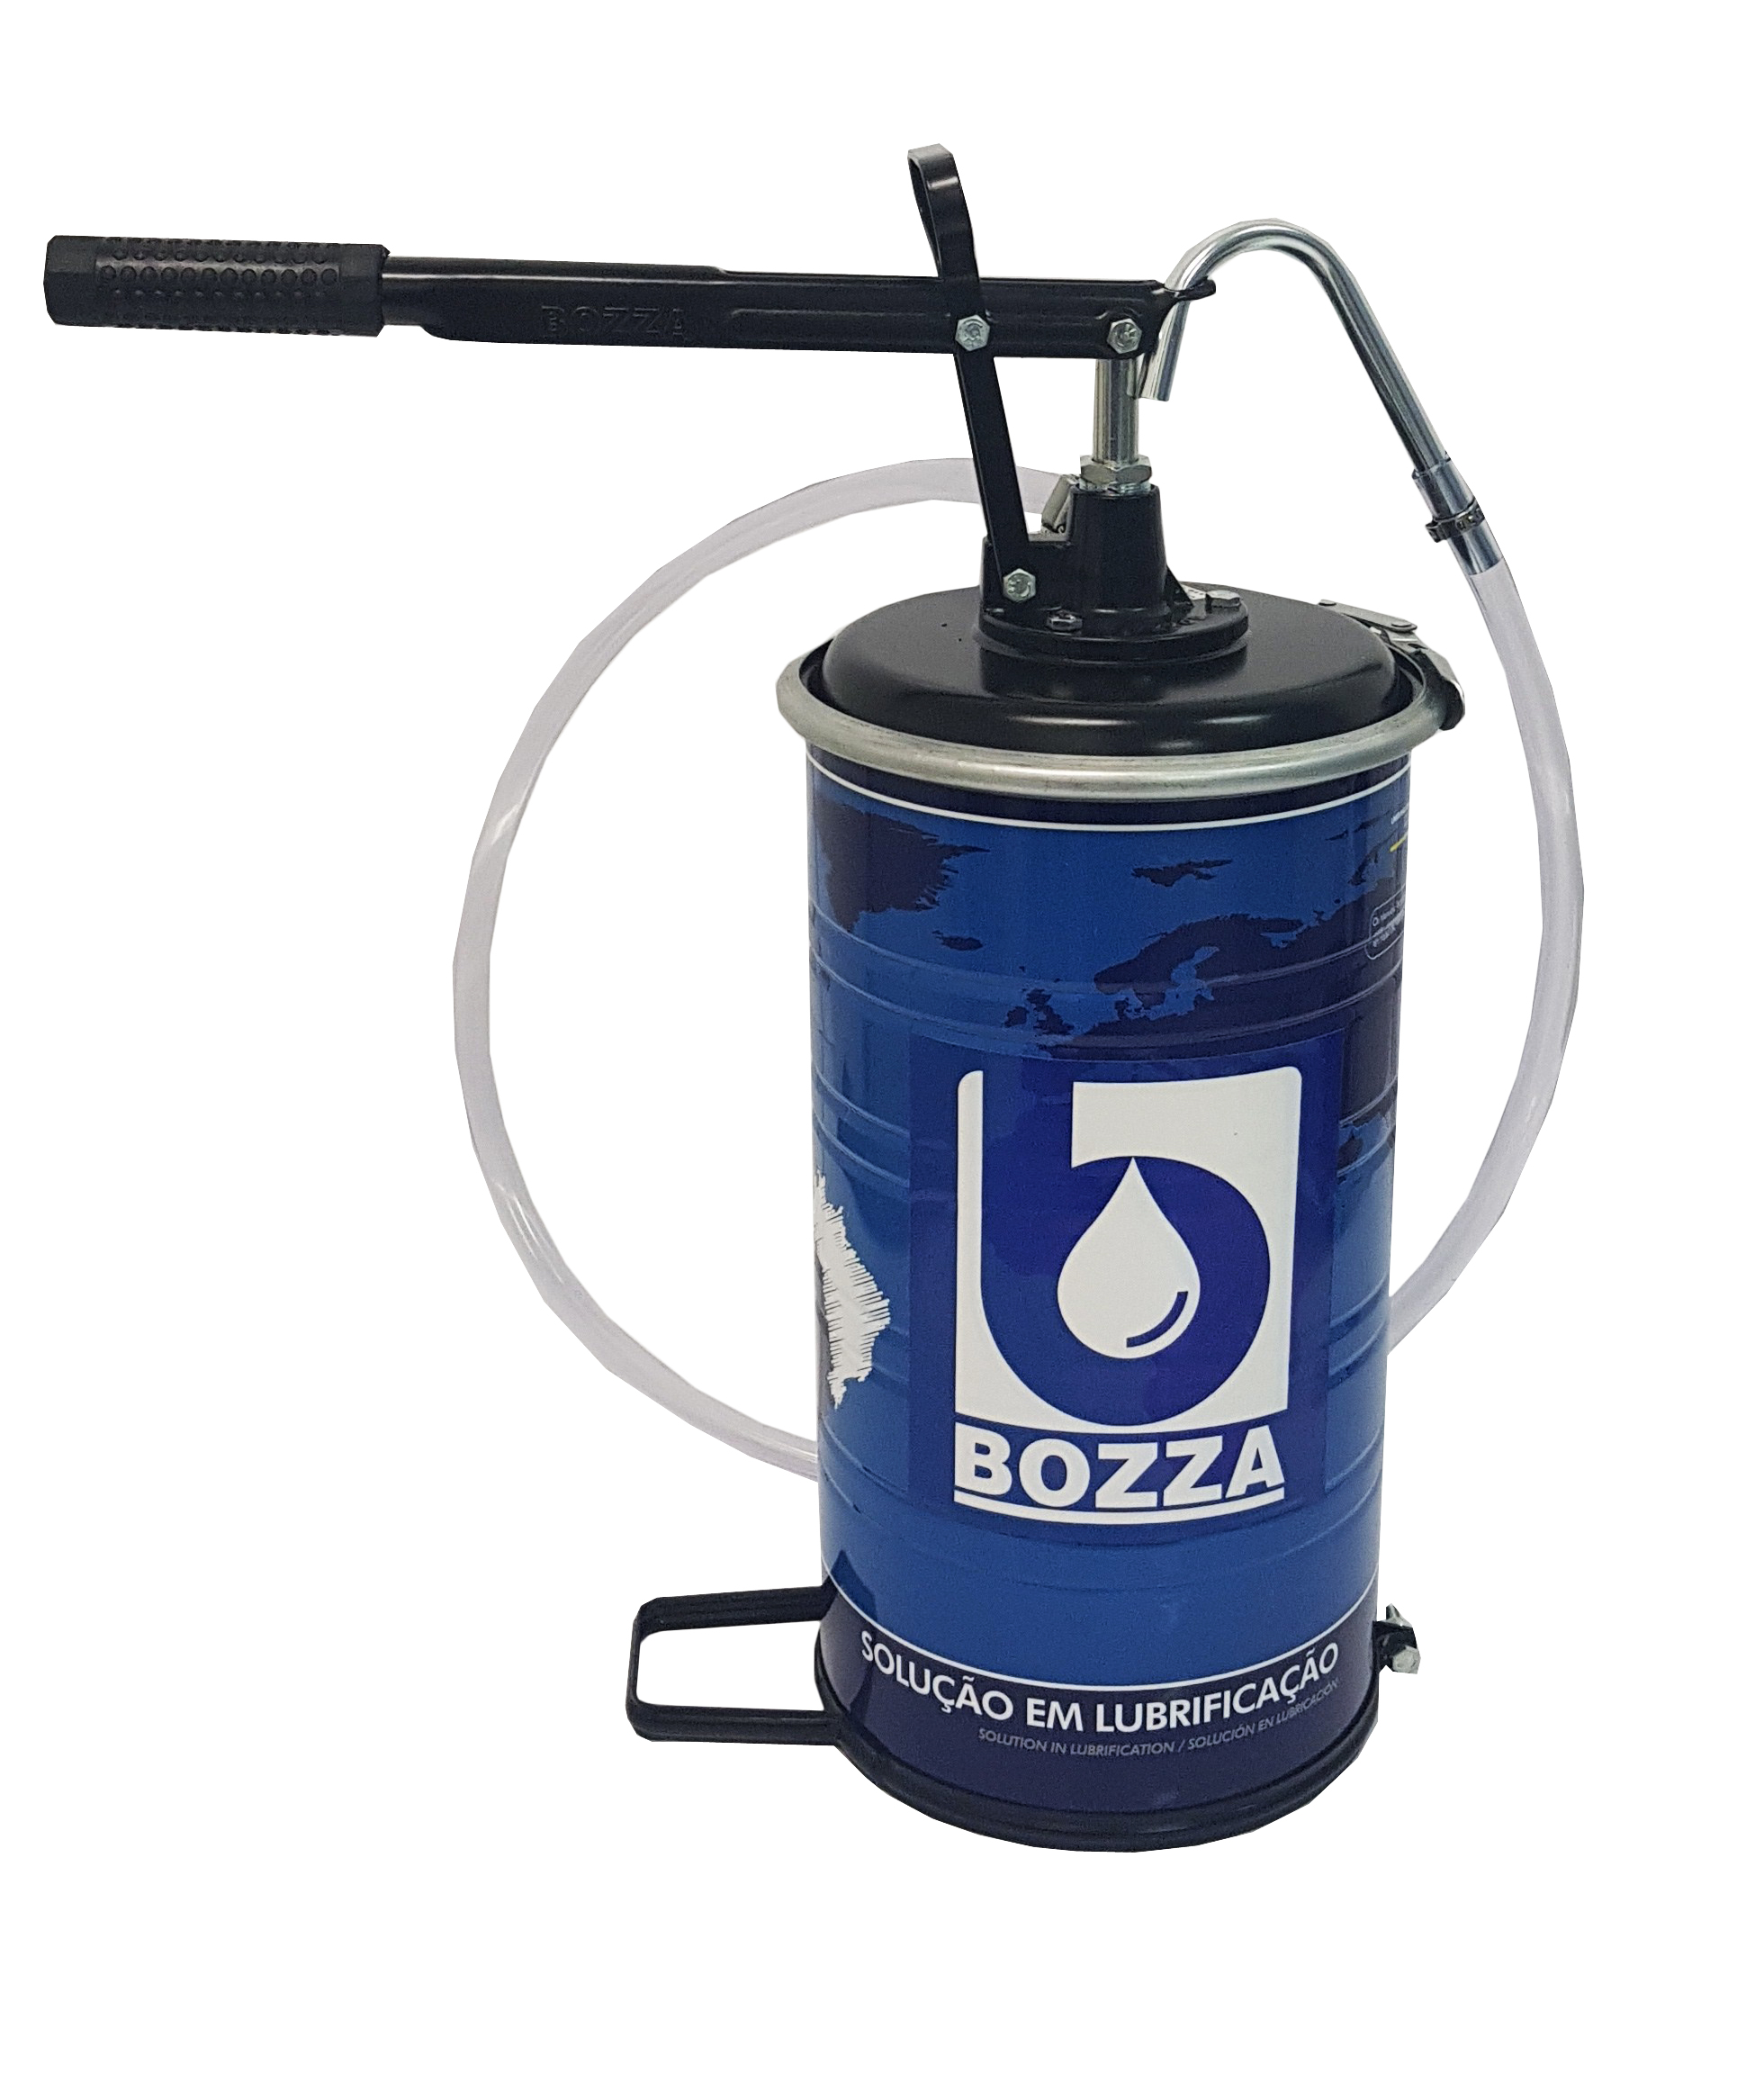 Manual Oil Pump with Reservoir 8021-G2 - Bozza